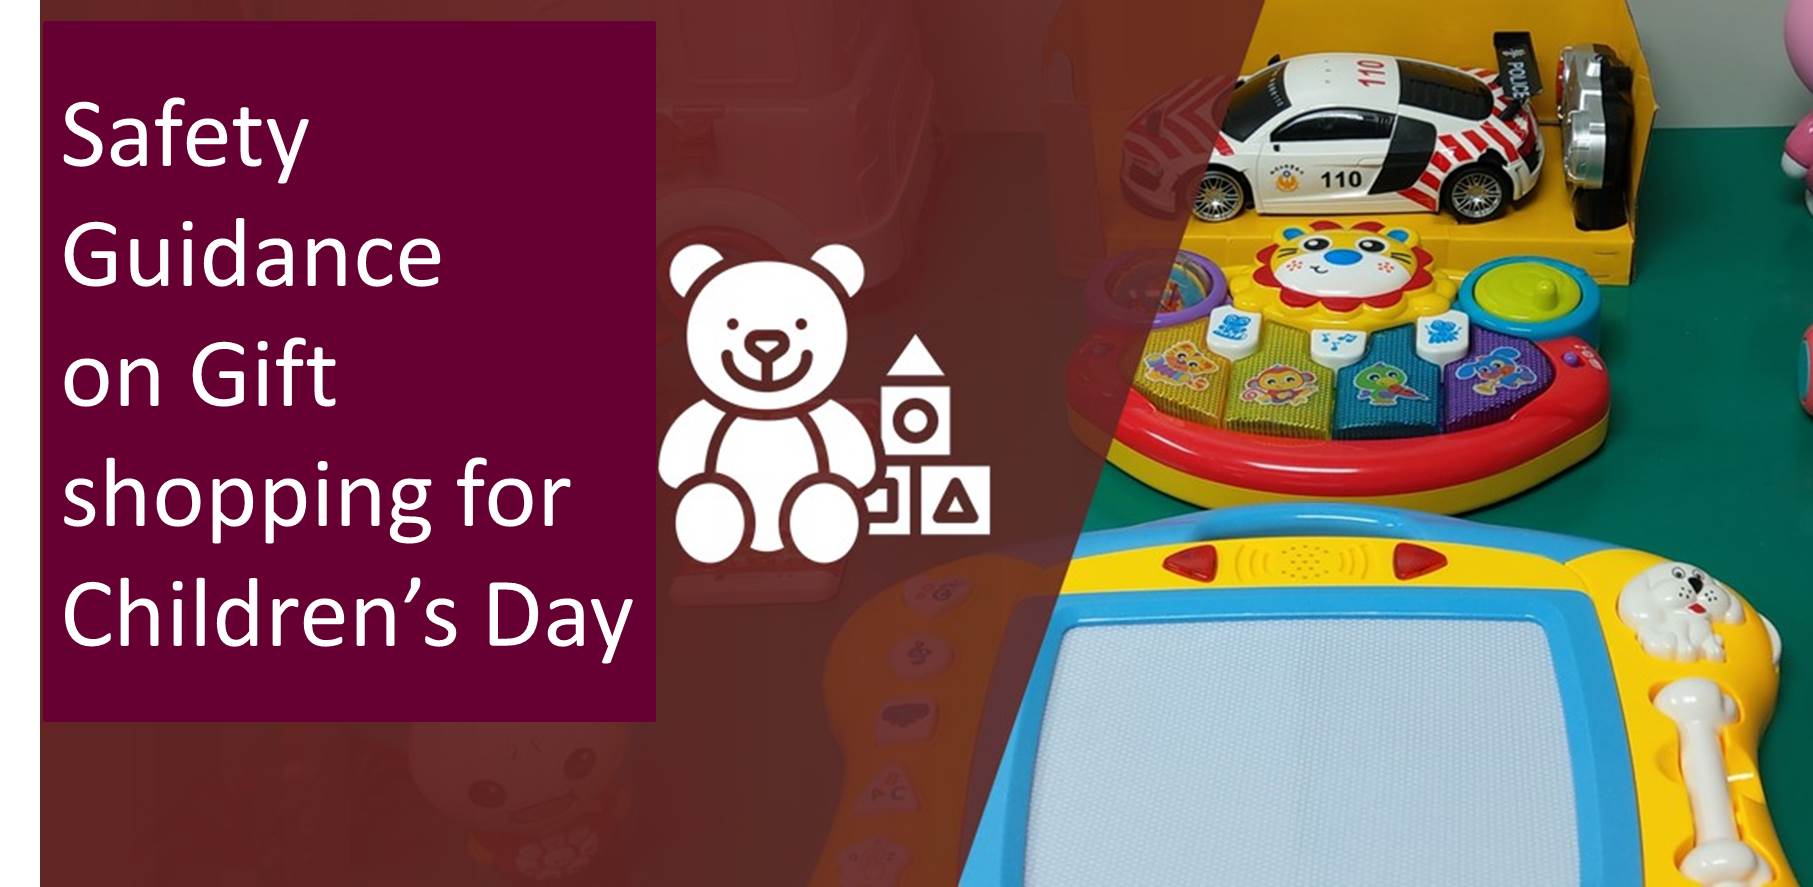 Safety Guidance on Gift Shopping for Children's Day.jpg